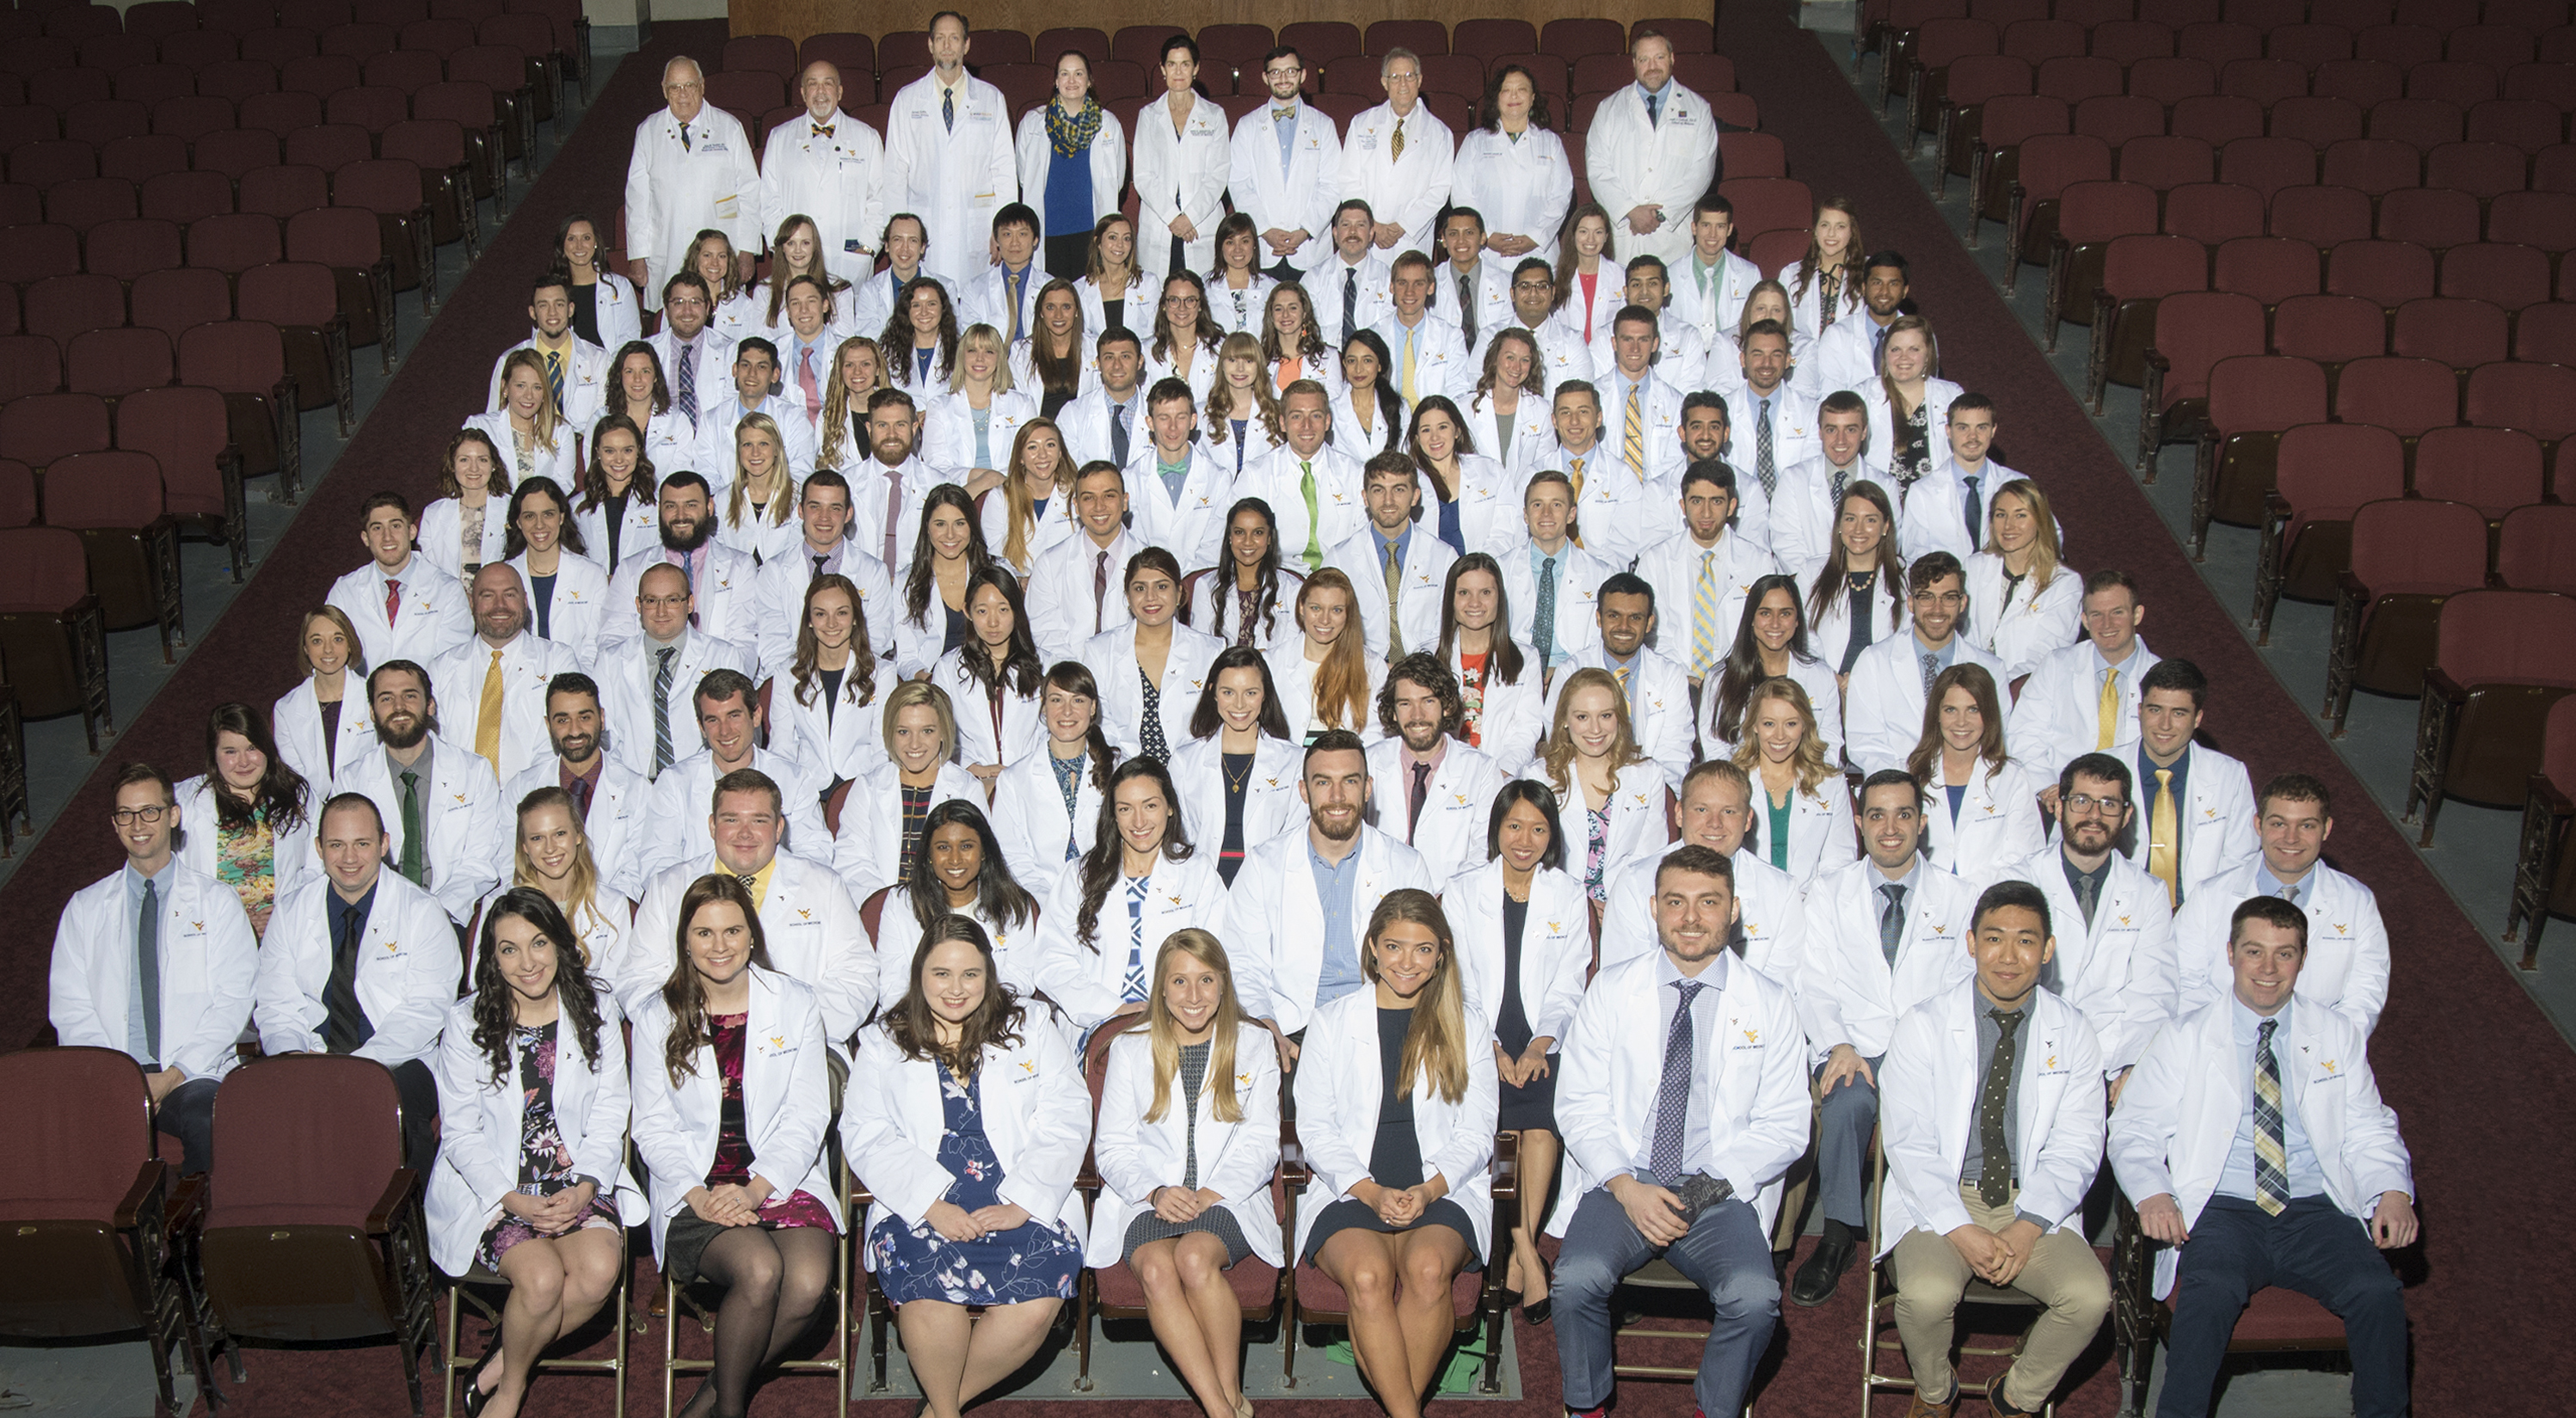 Group shot of WVU School of Medicine Class of 2020.